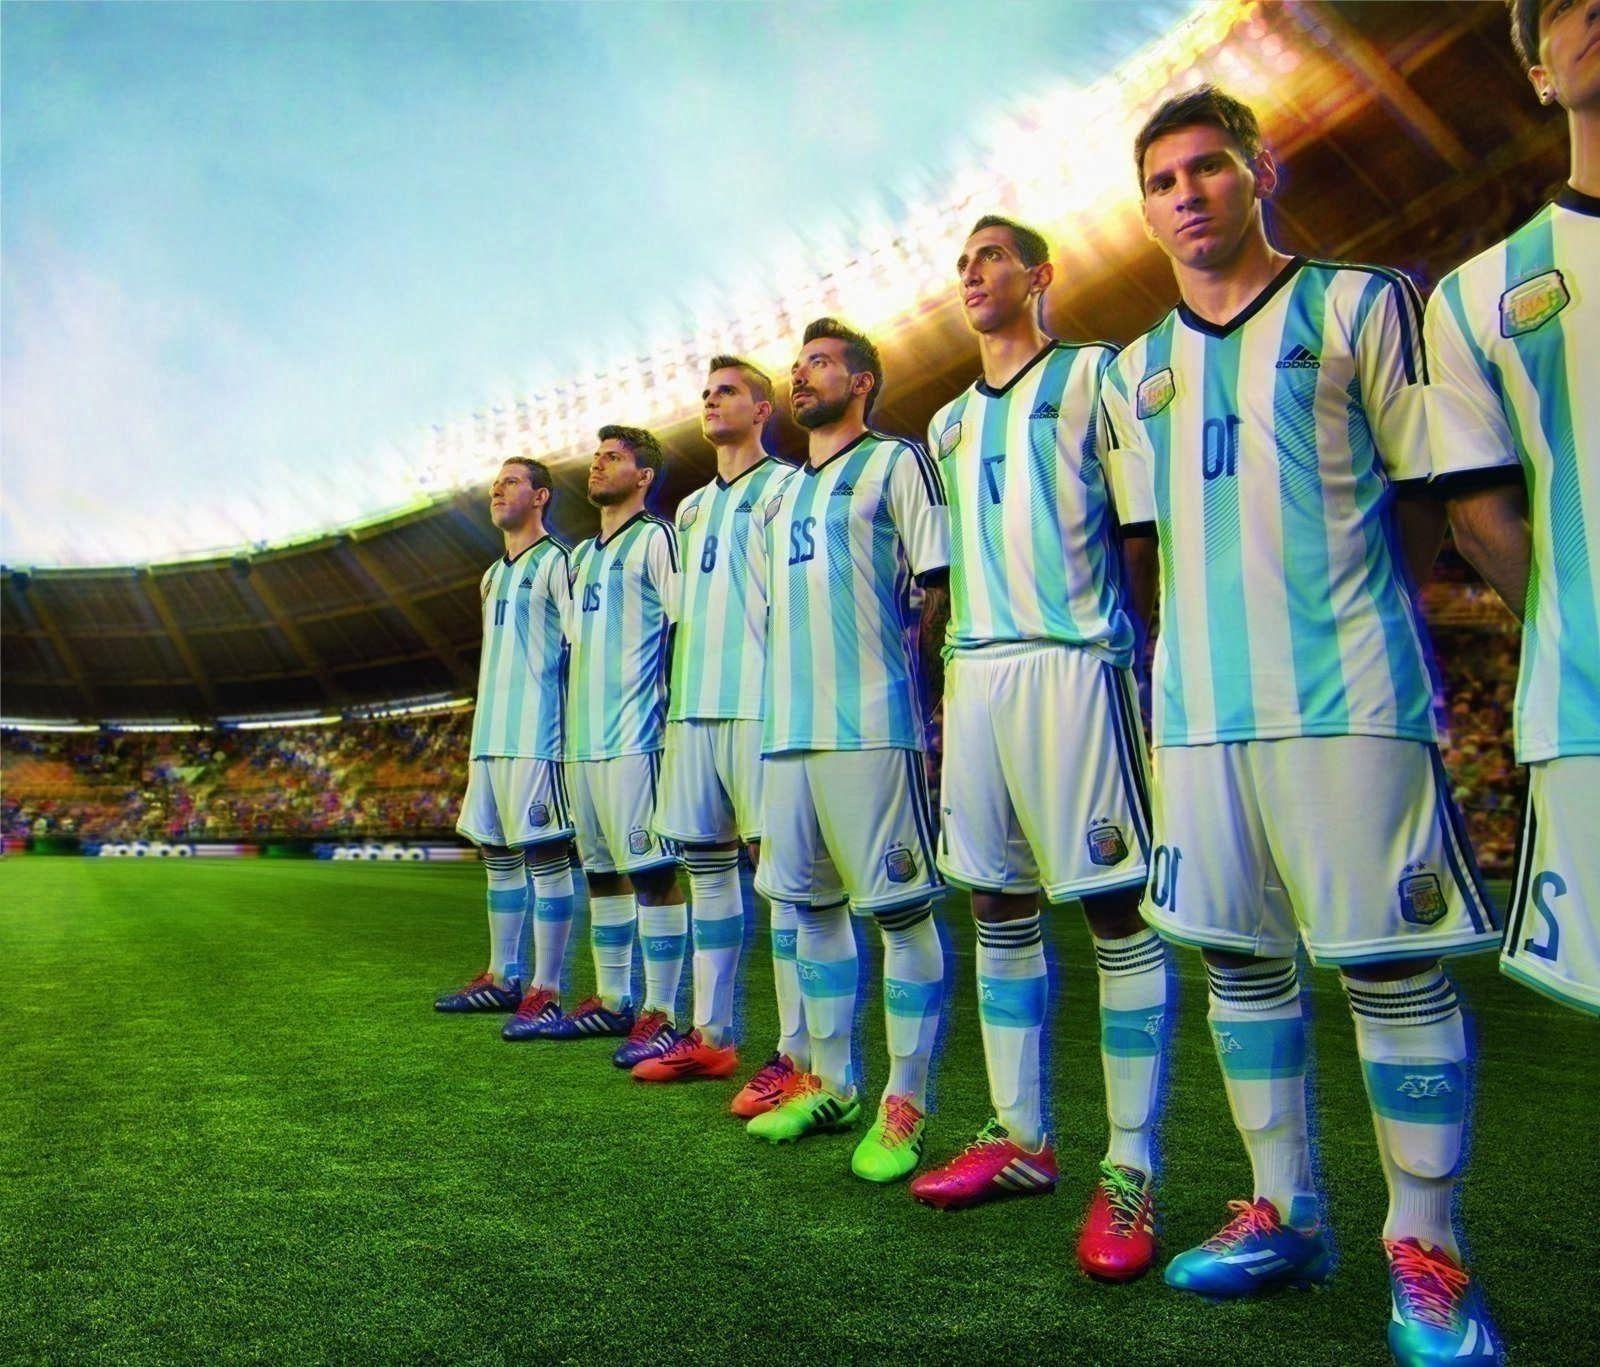 argentina football team 2022 world cup wallpaper